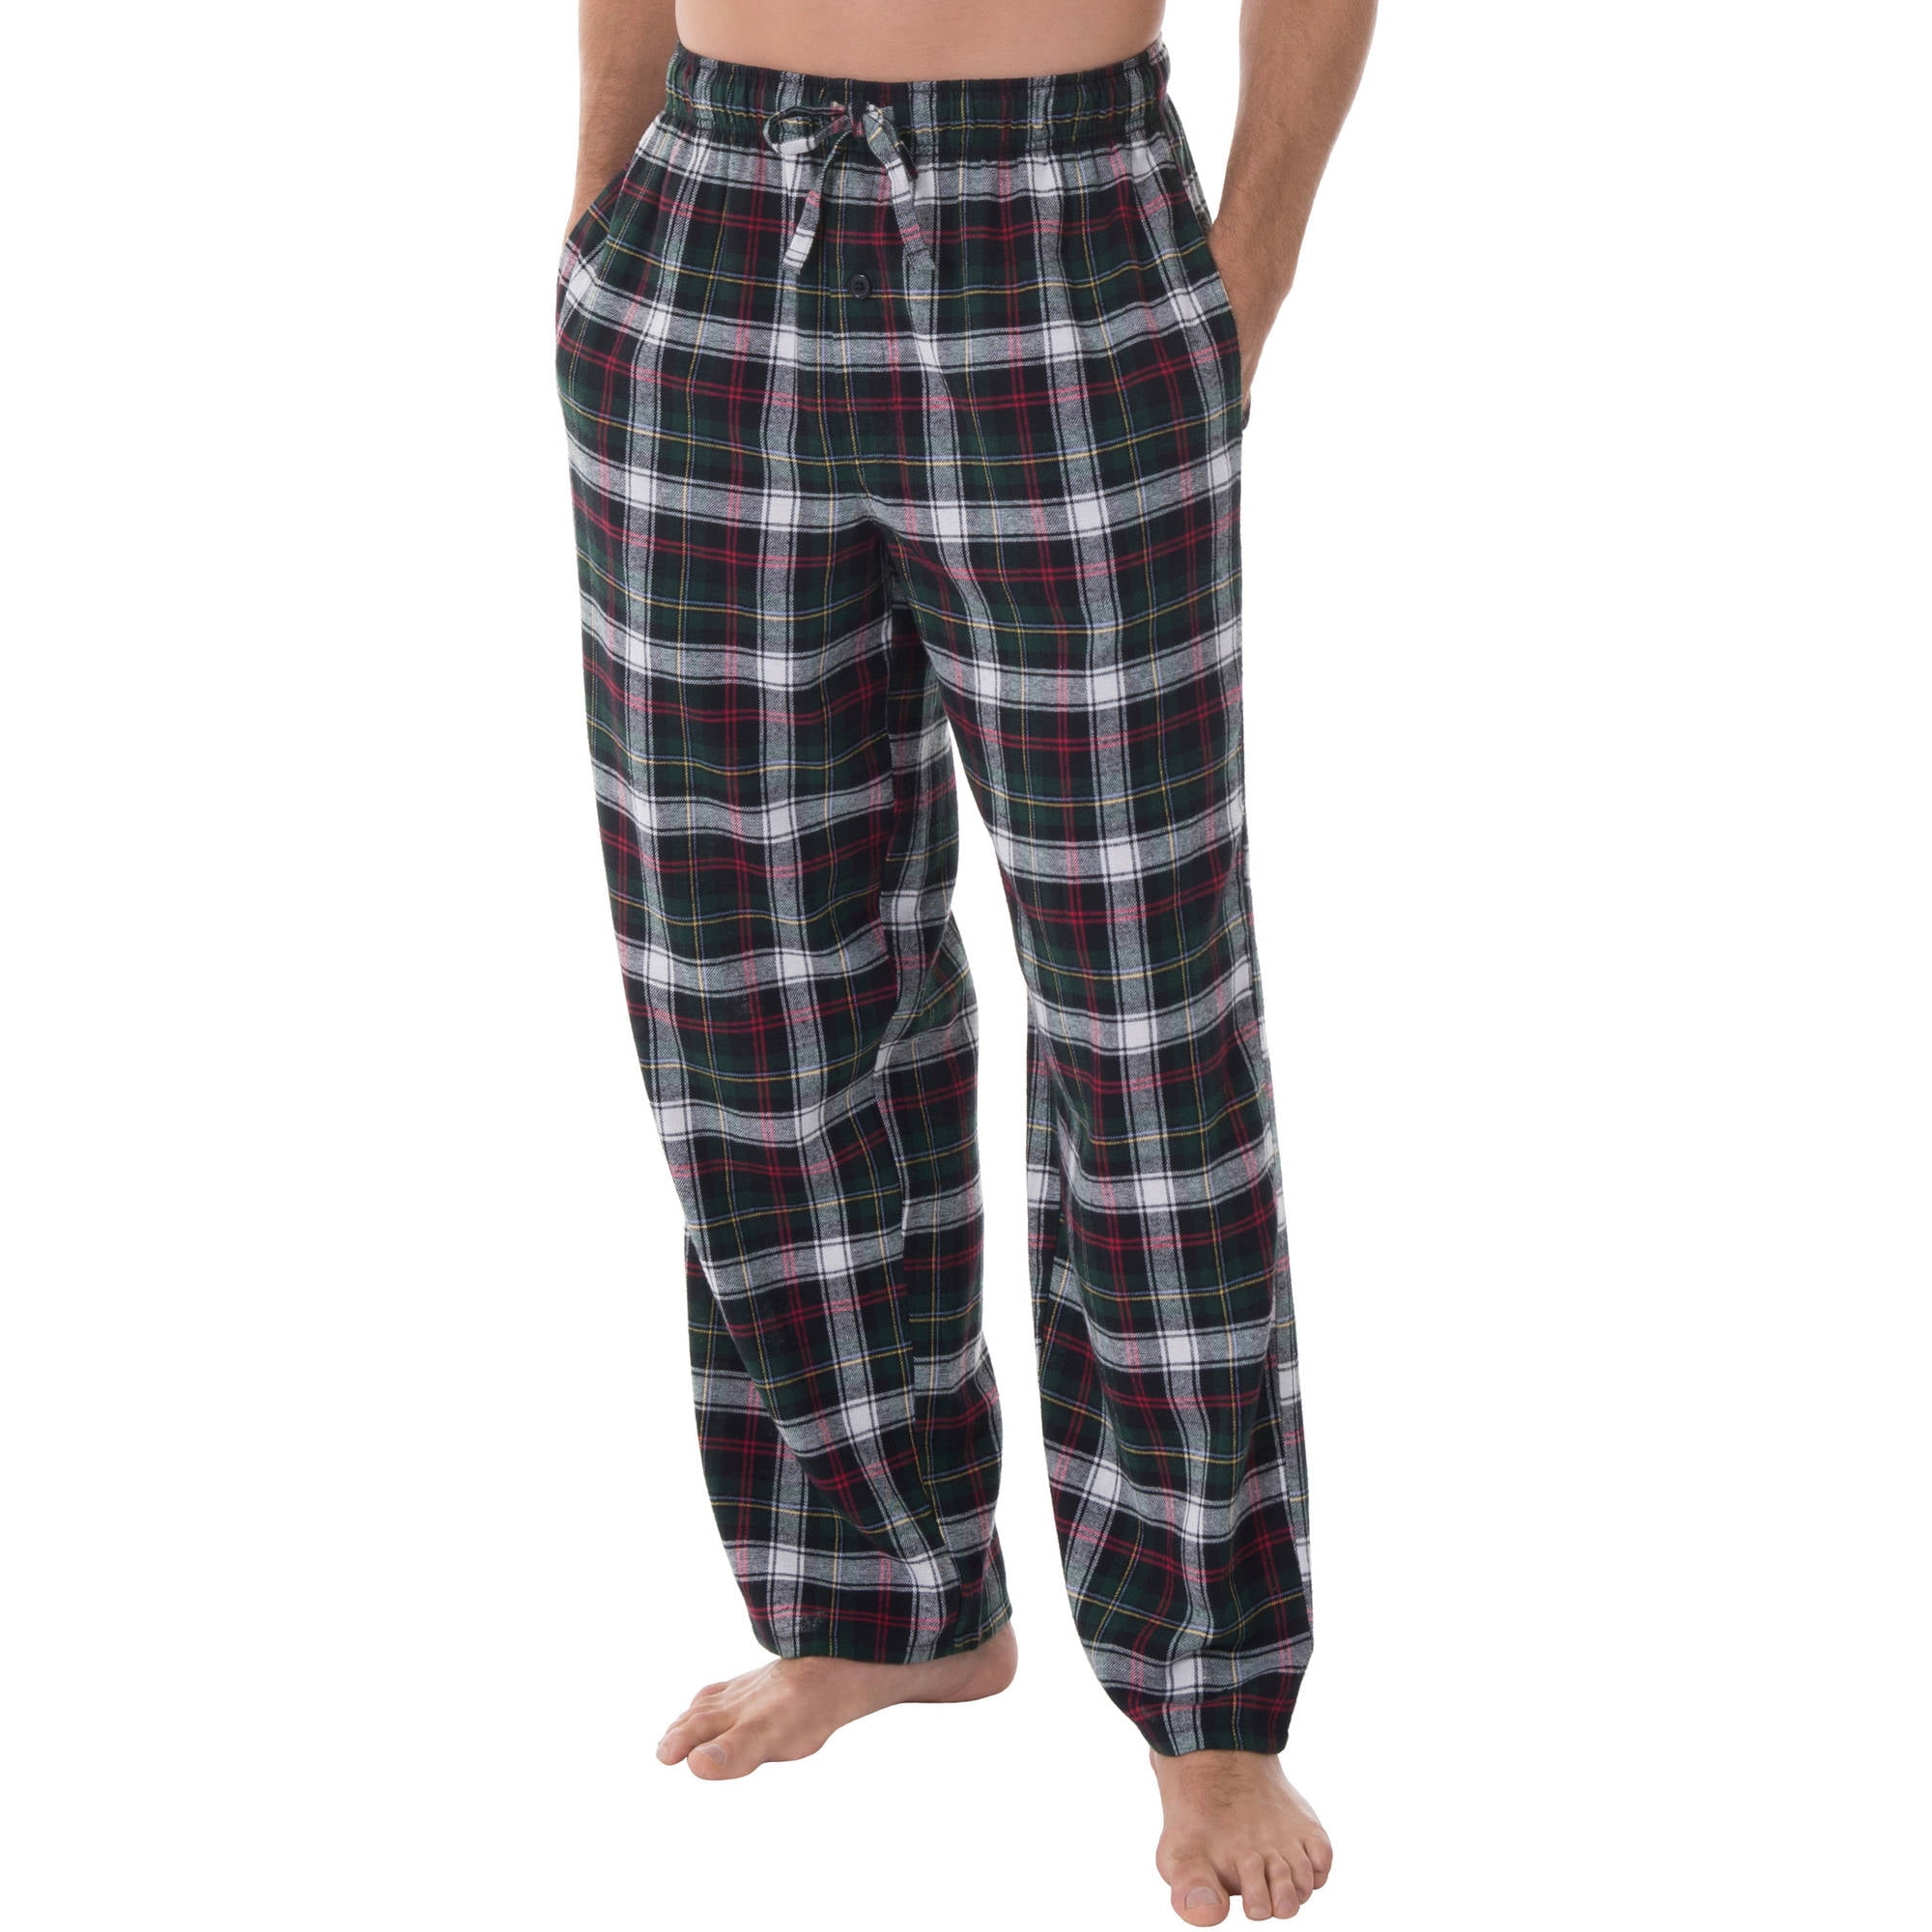 Fruit of the Loom - Big Men's Flannel Sleep Pant - Walmart.com